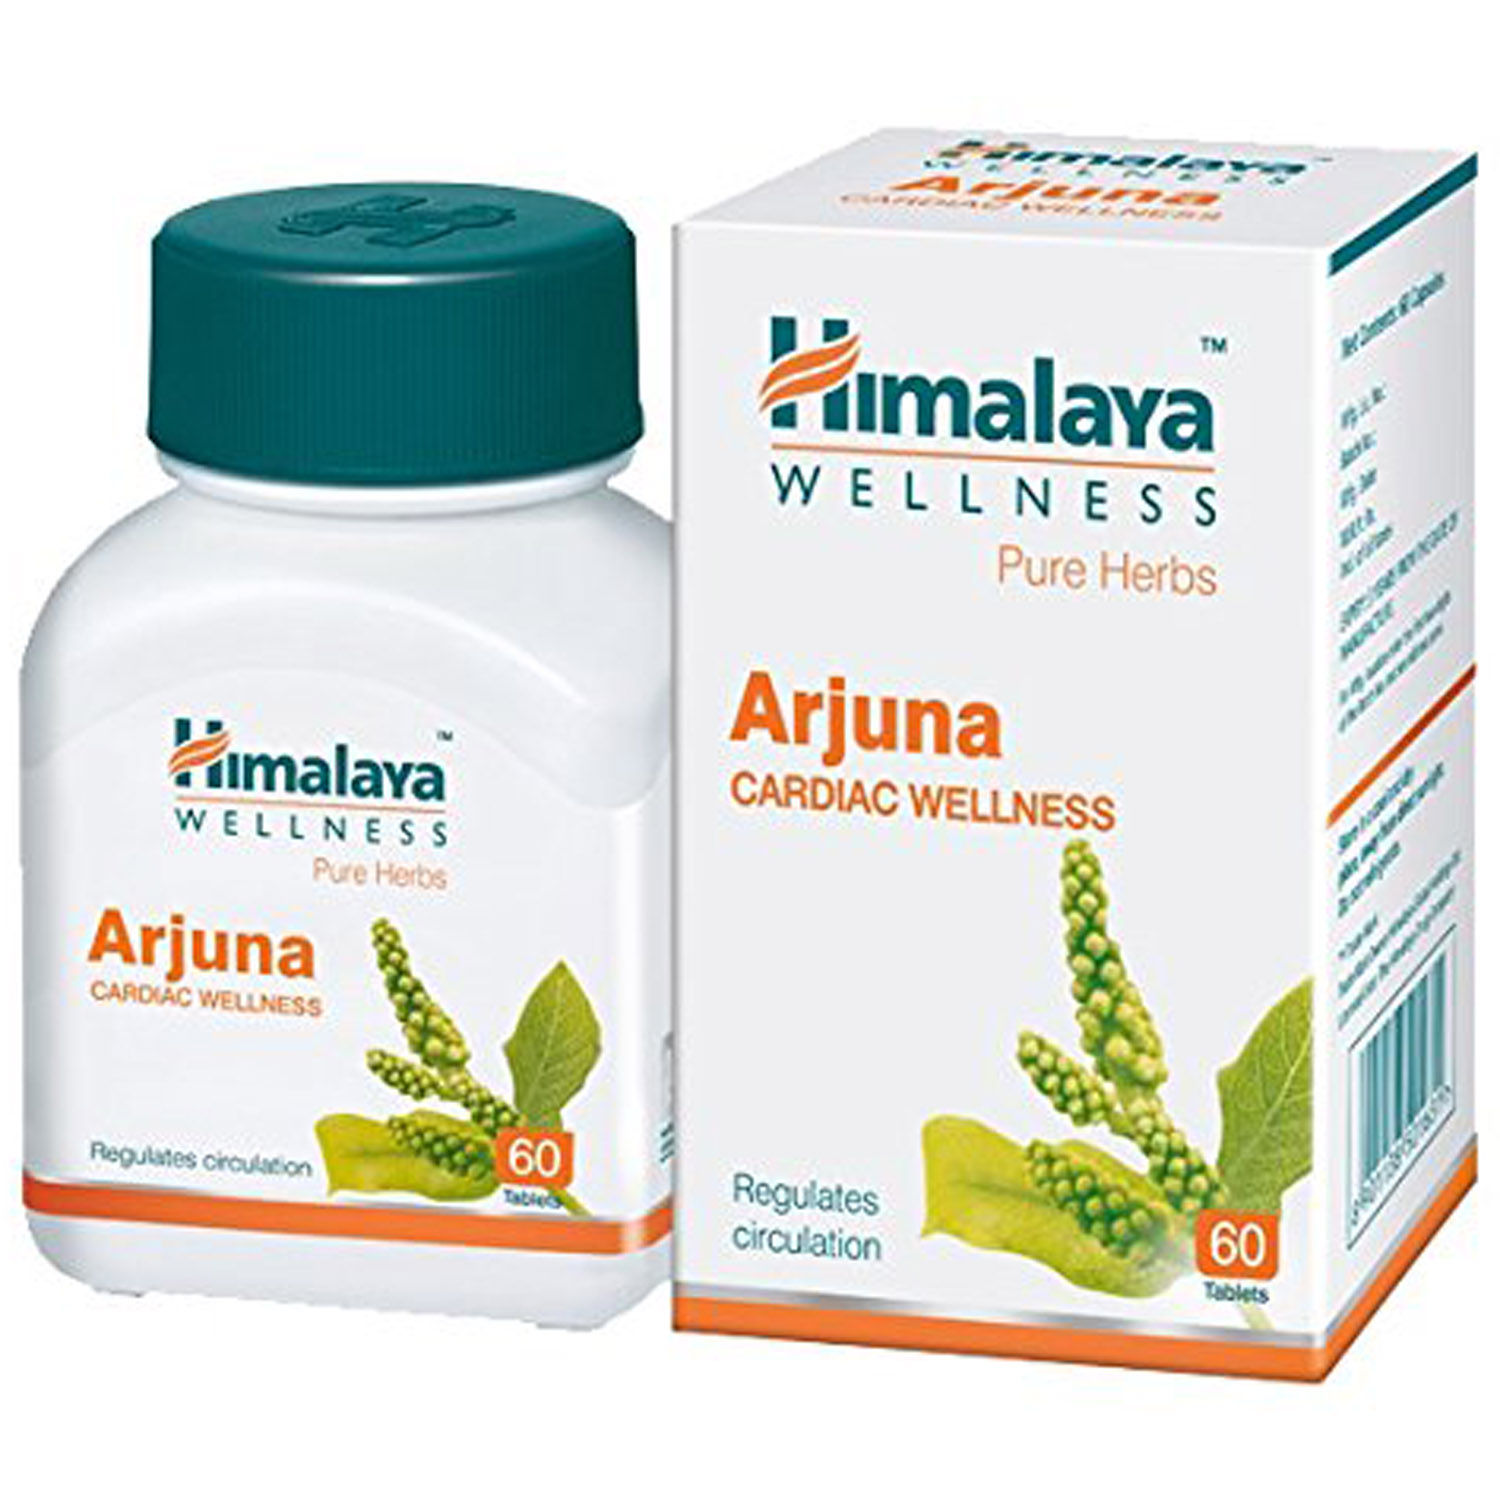 Buy Himalaya Arjuna Cardiac Wellness, 60 Capsules Online